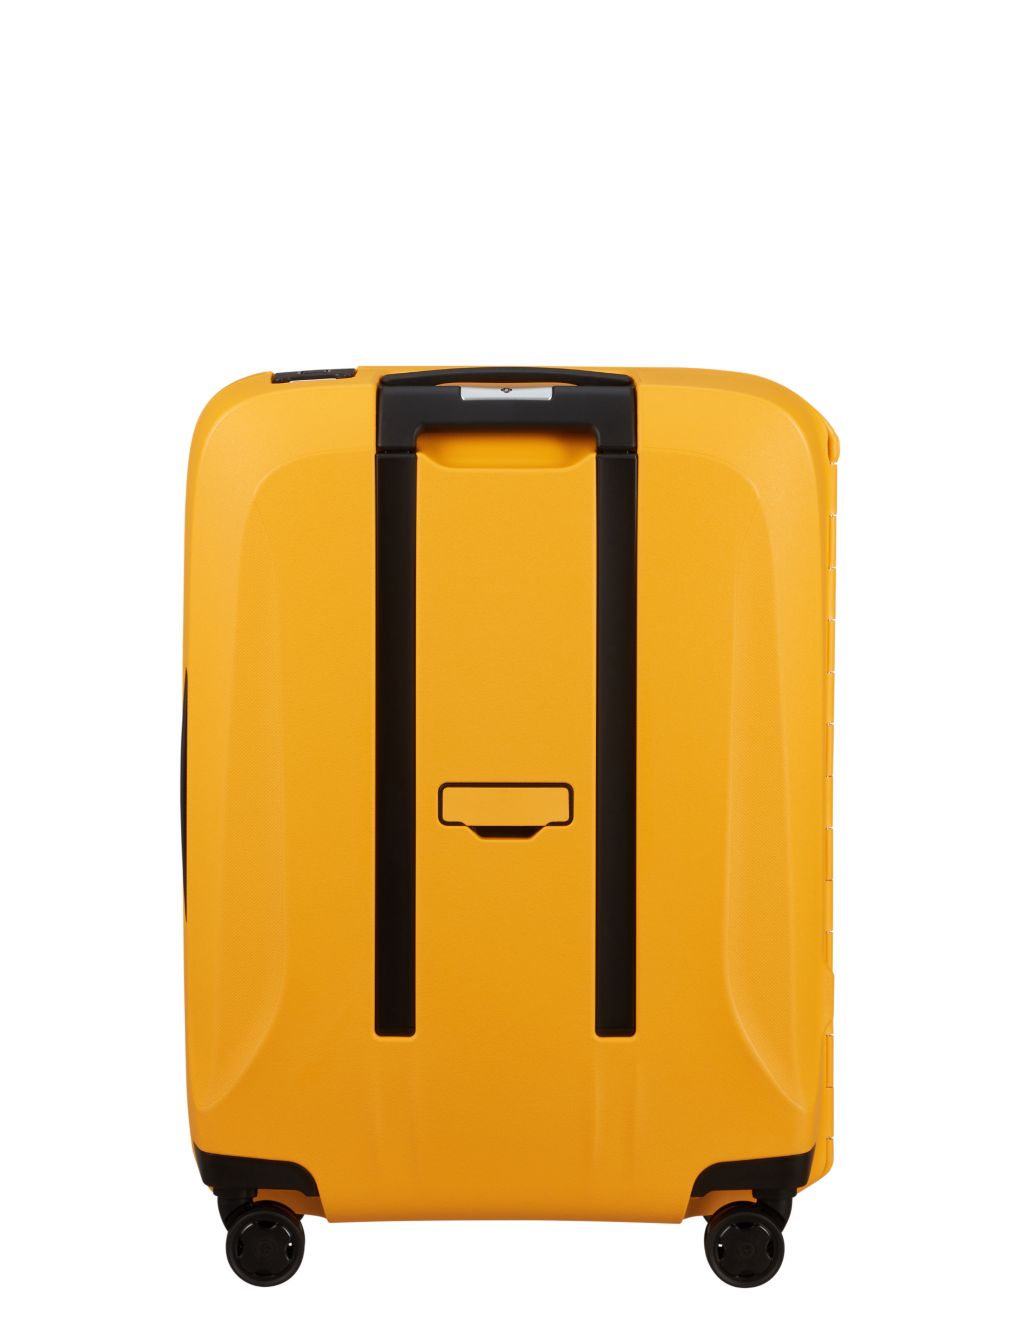 Essens 4 Wheel Hard Shell Cabin Suitcase image 2